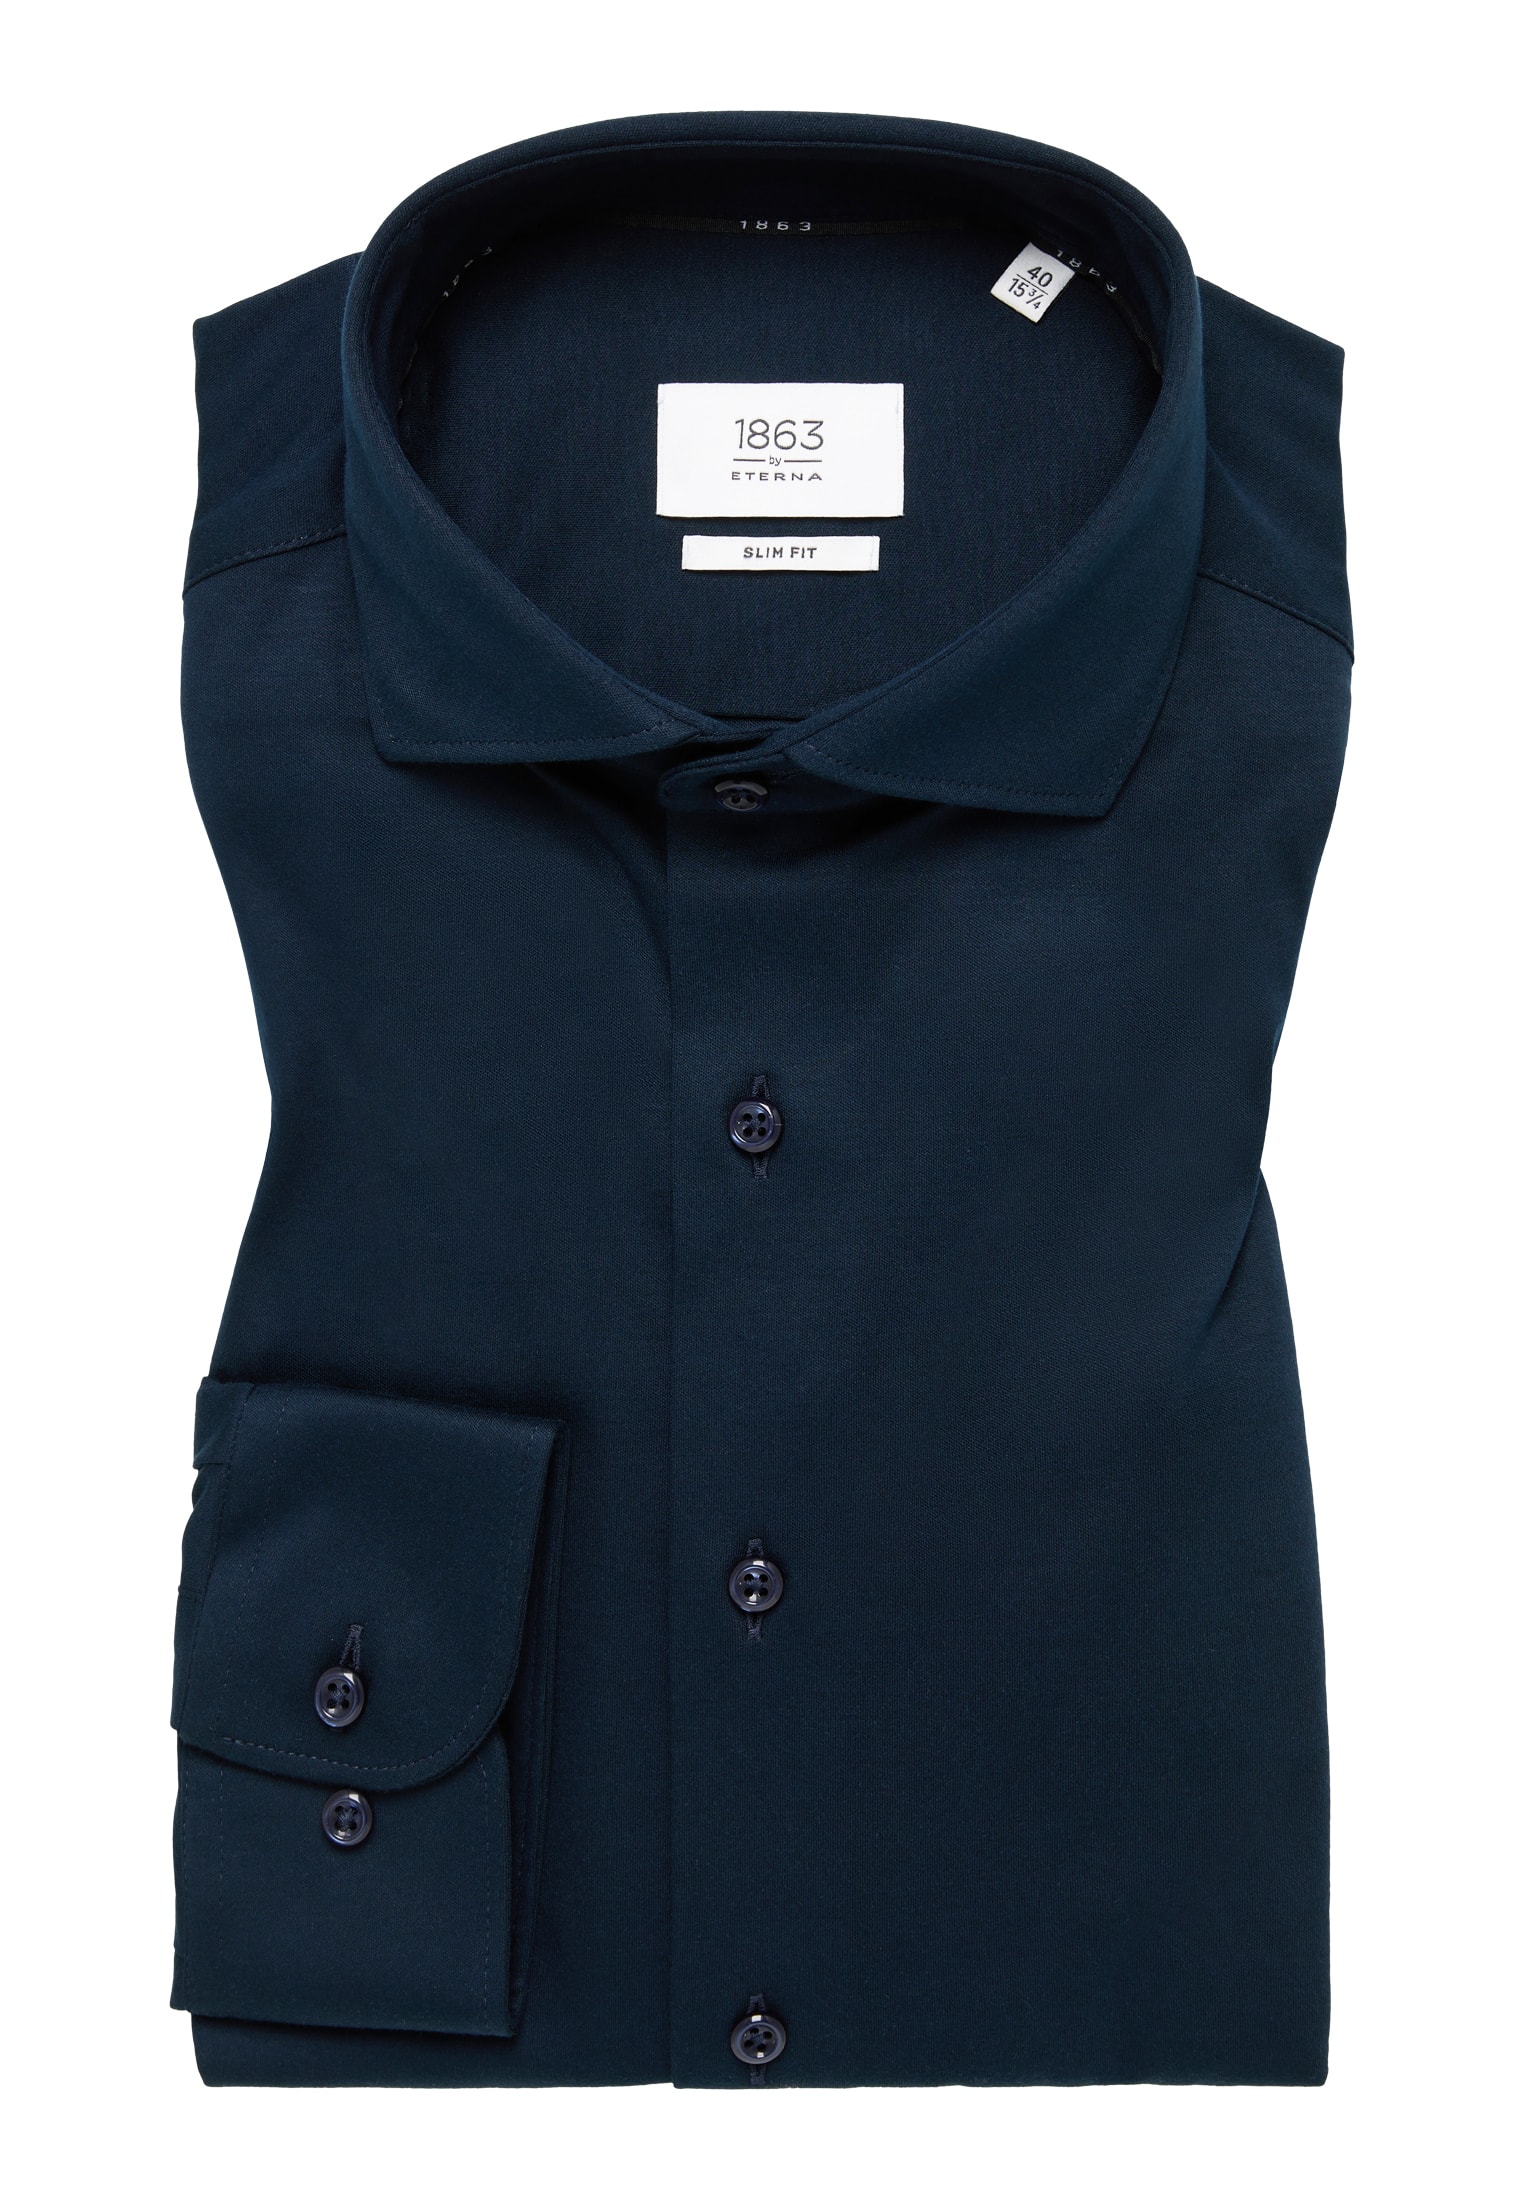 SLIM FIT Jersey Shirt unifarben 40 | Langarm | | 1SH00378-01-81-40-1/1 dunkelblau in | dunkelblau